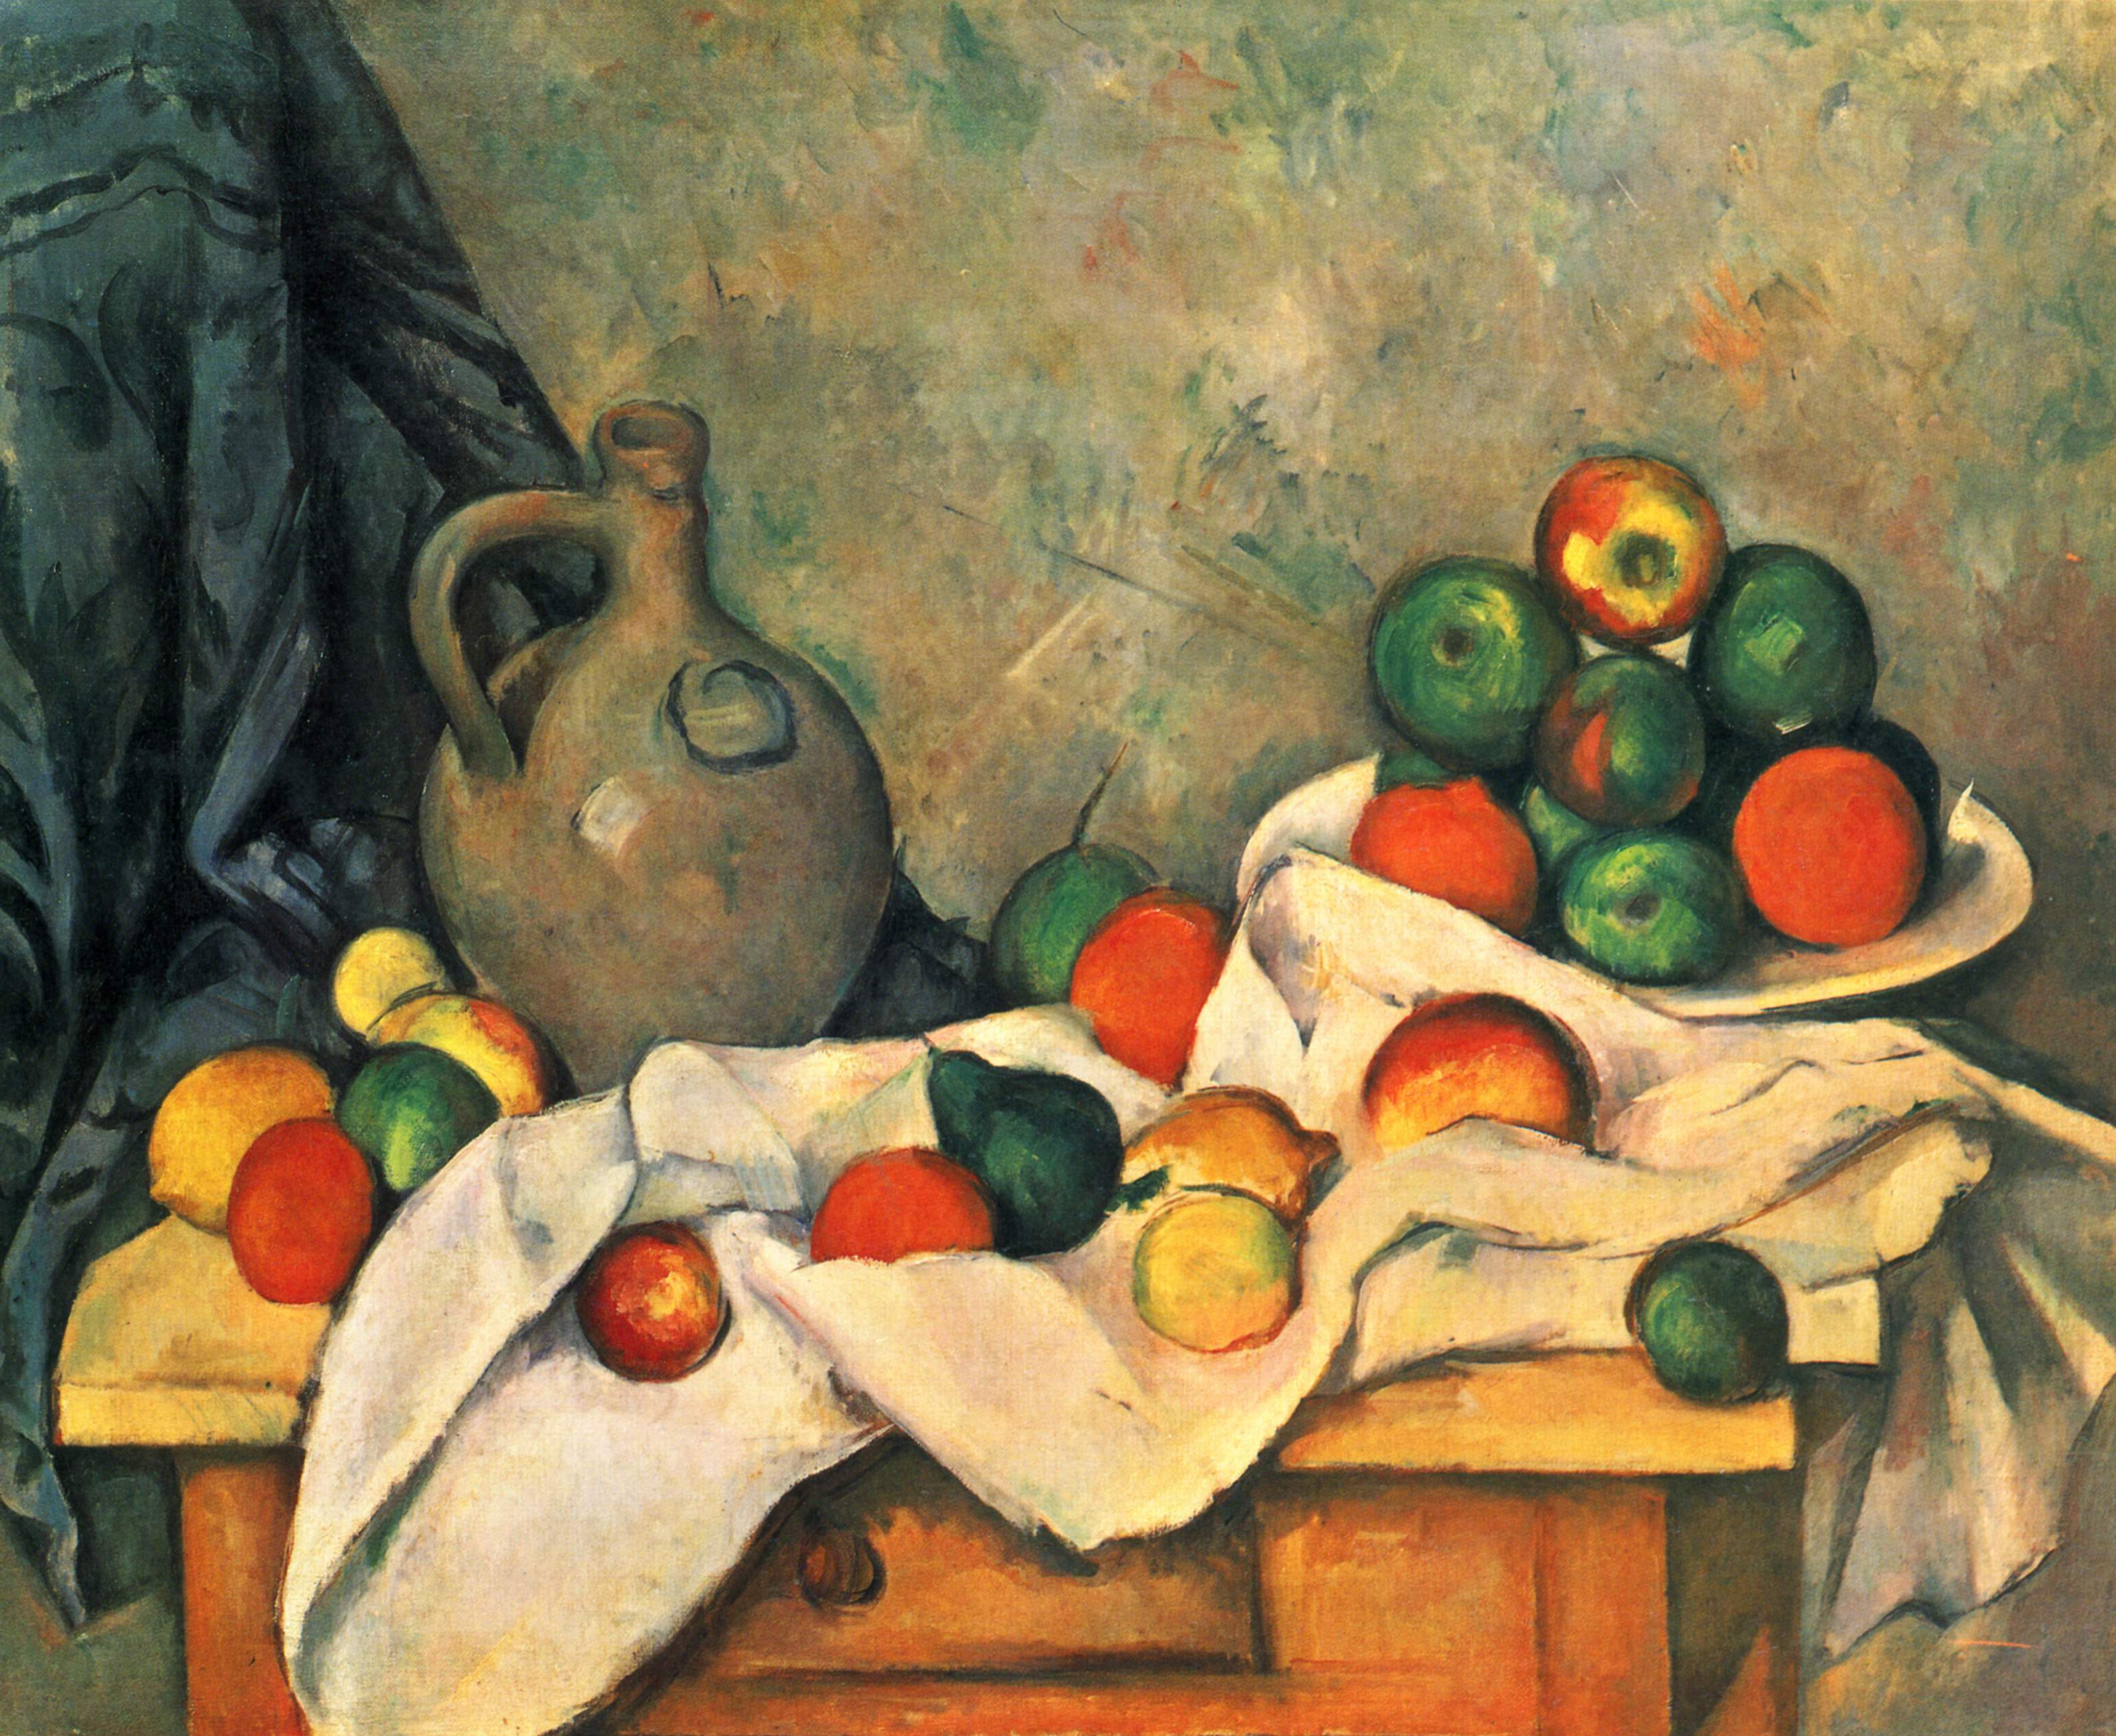 Image via Wikipedia; artwork by Cezanne.